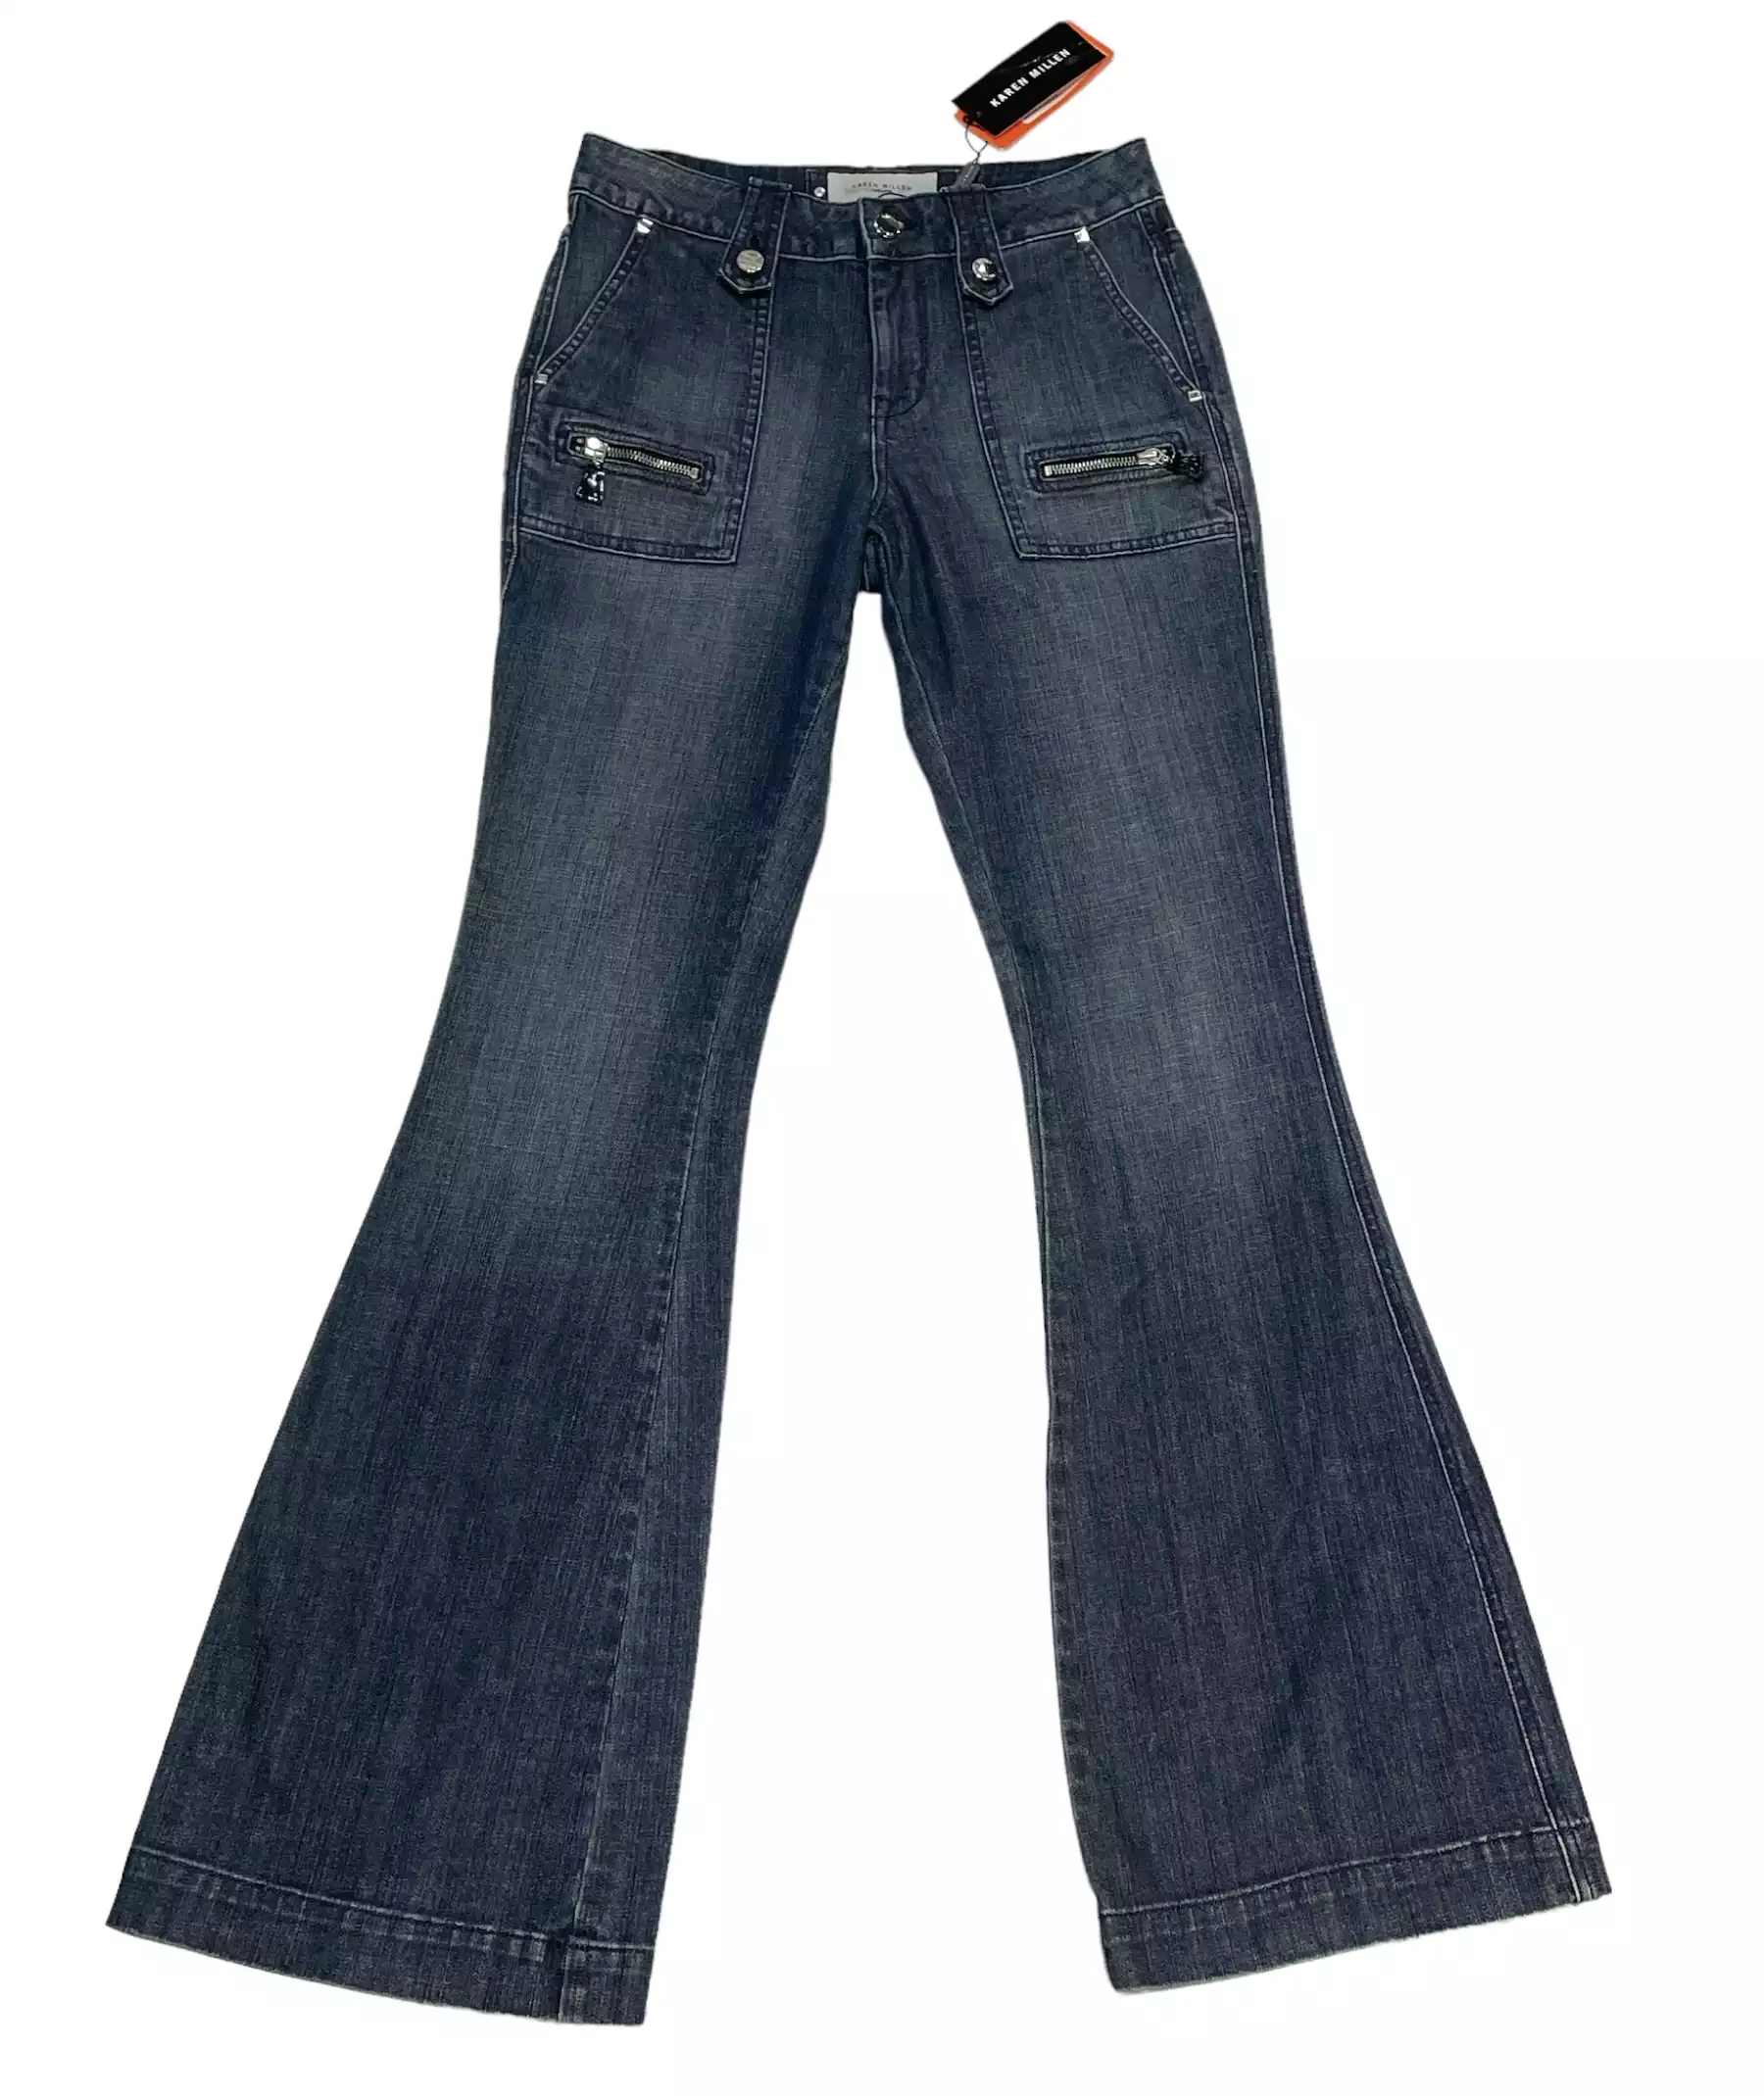 Denim Jeans by Karen Millen